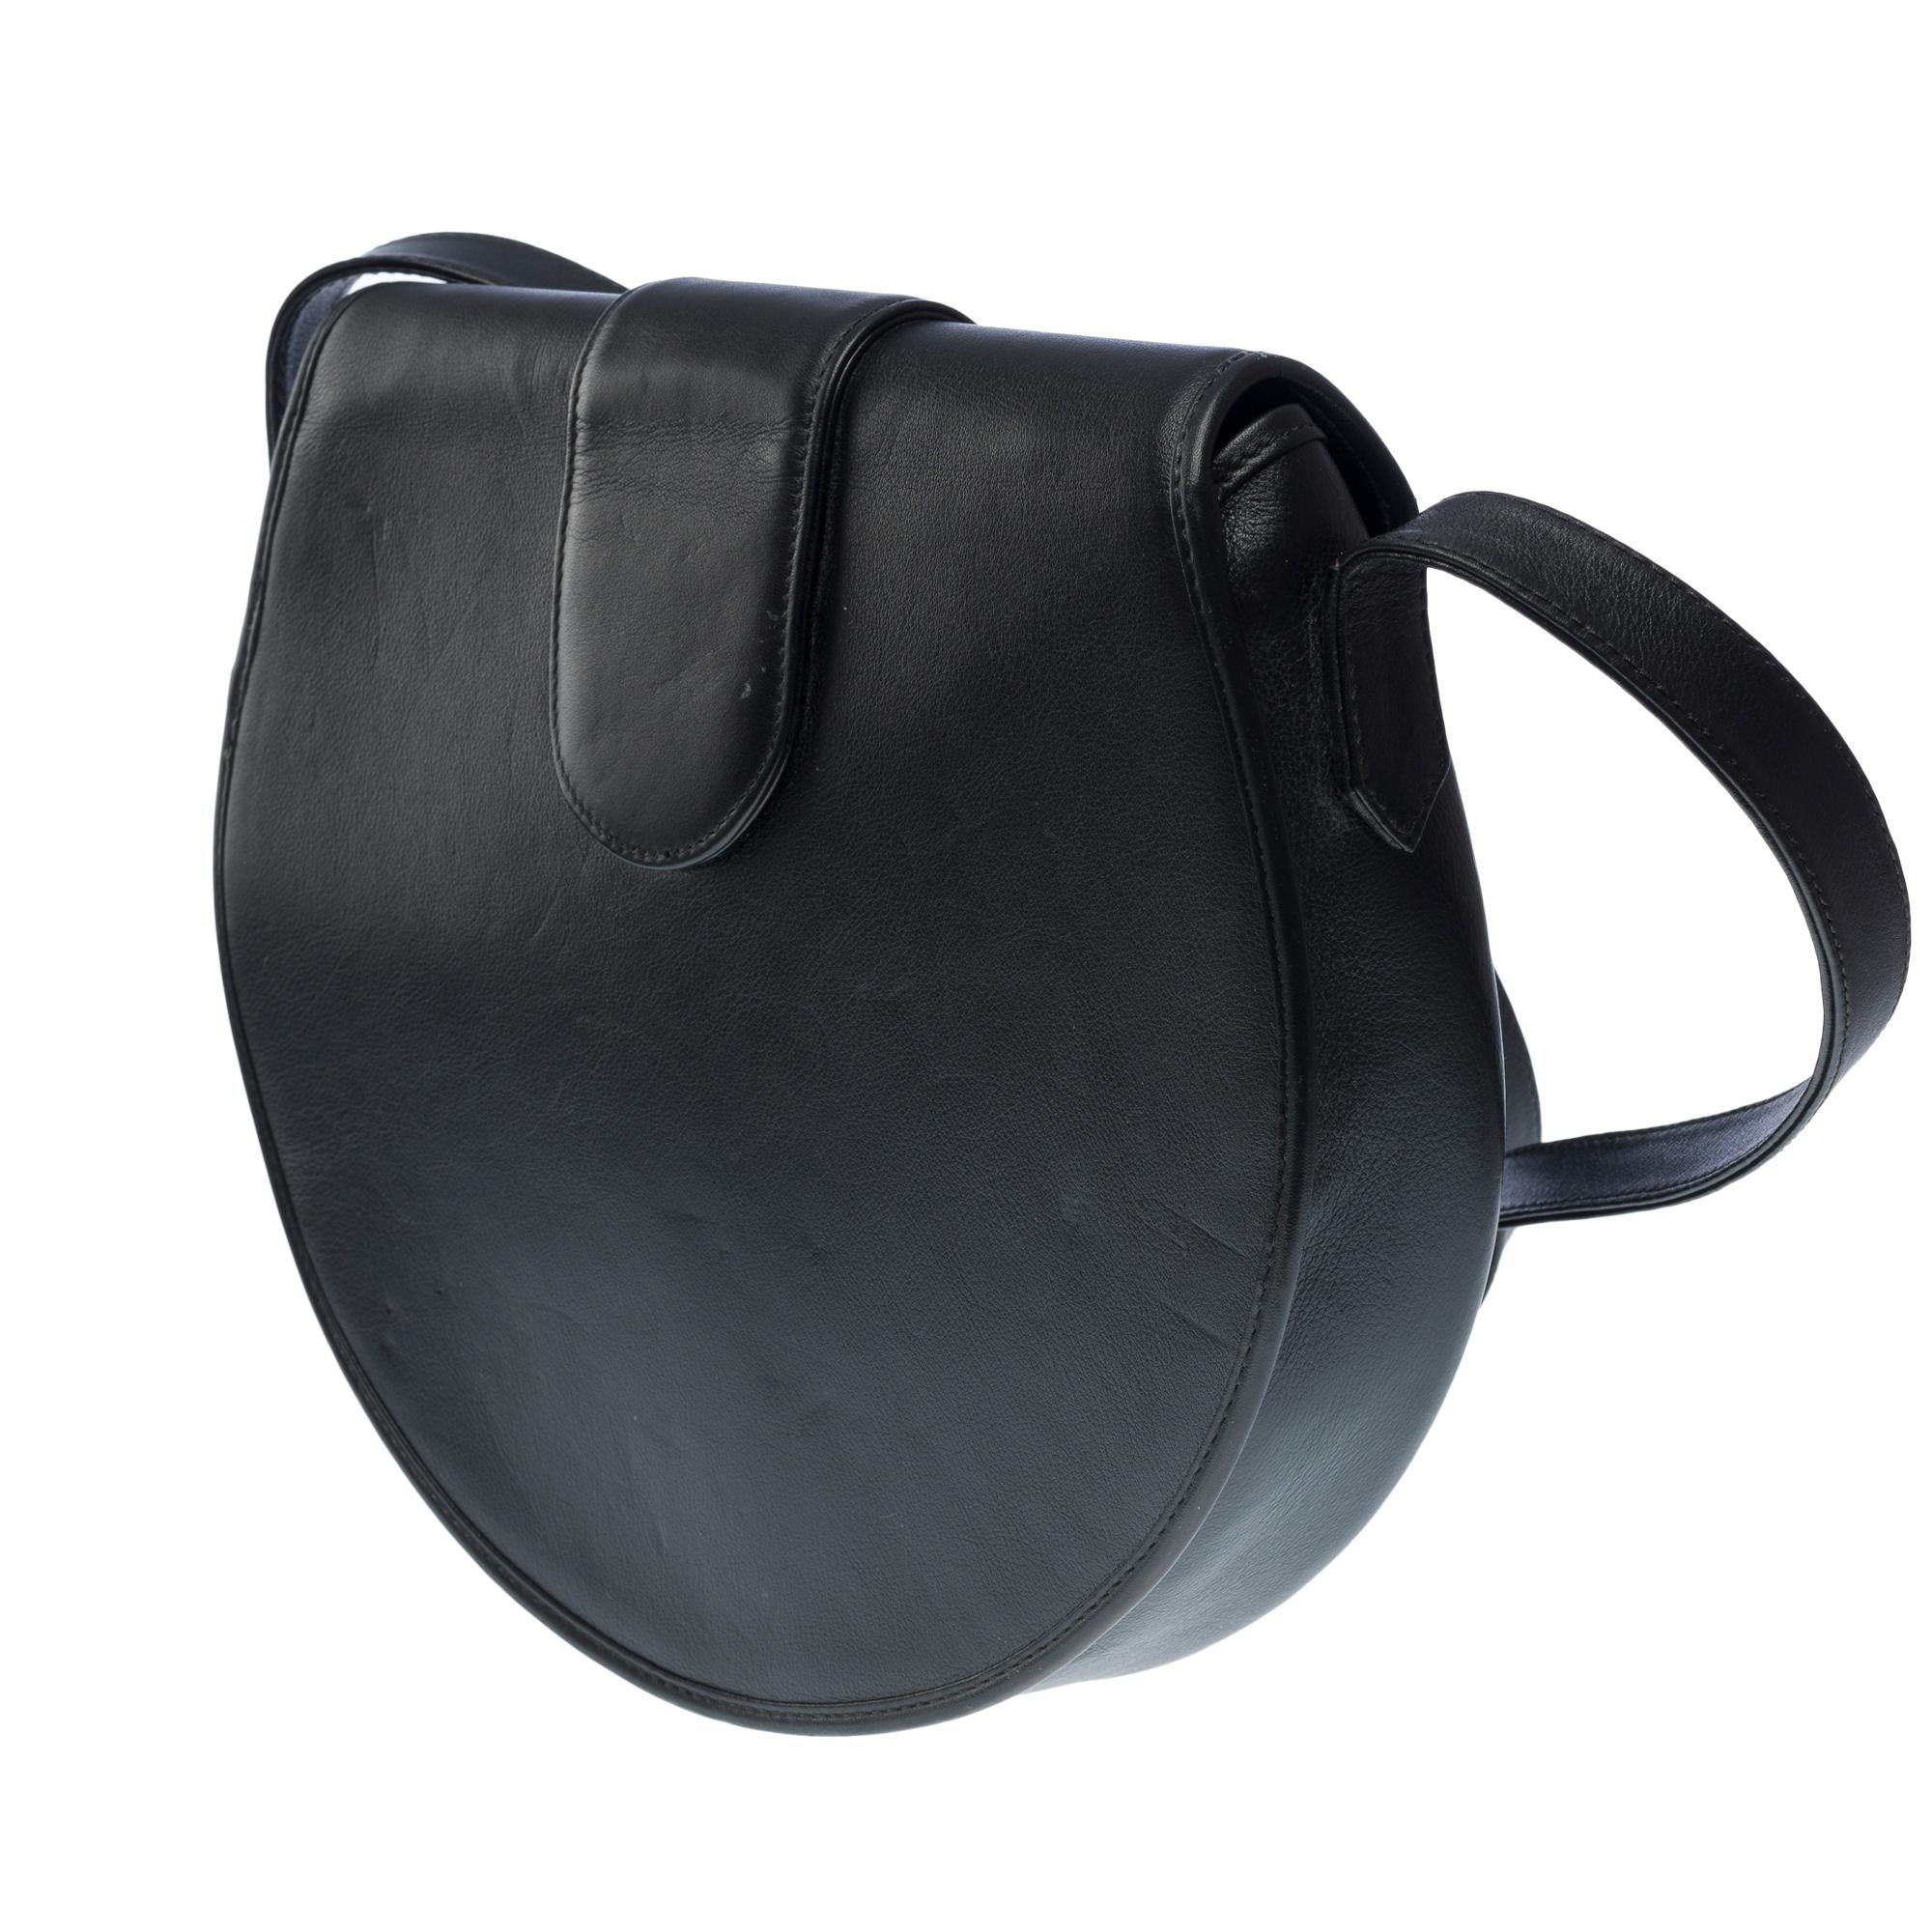 Lovely YSL shoulder bag in the shape of a half moon in black leather, GHW 2